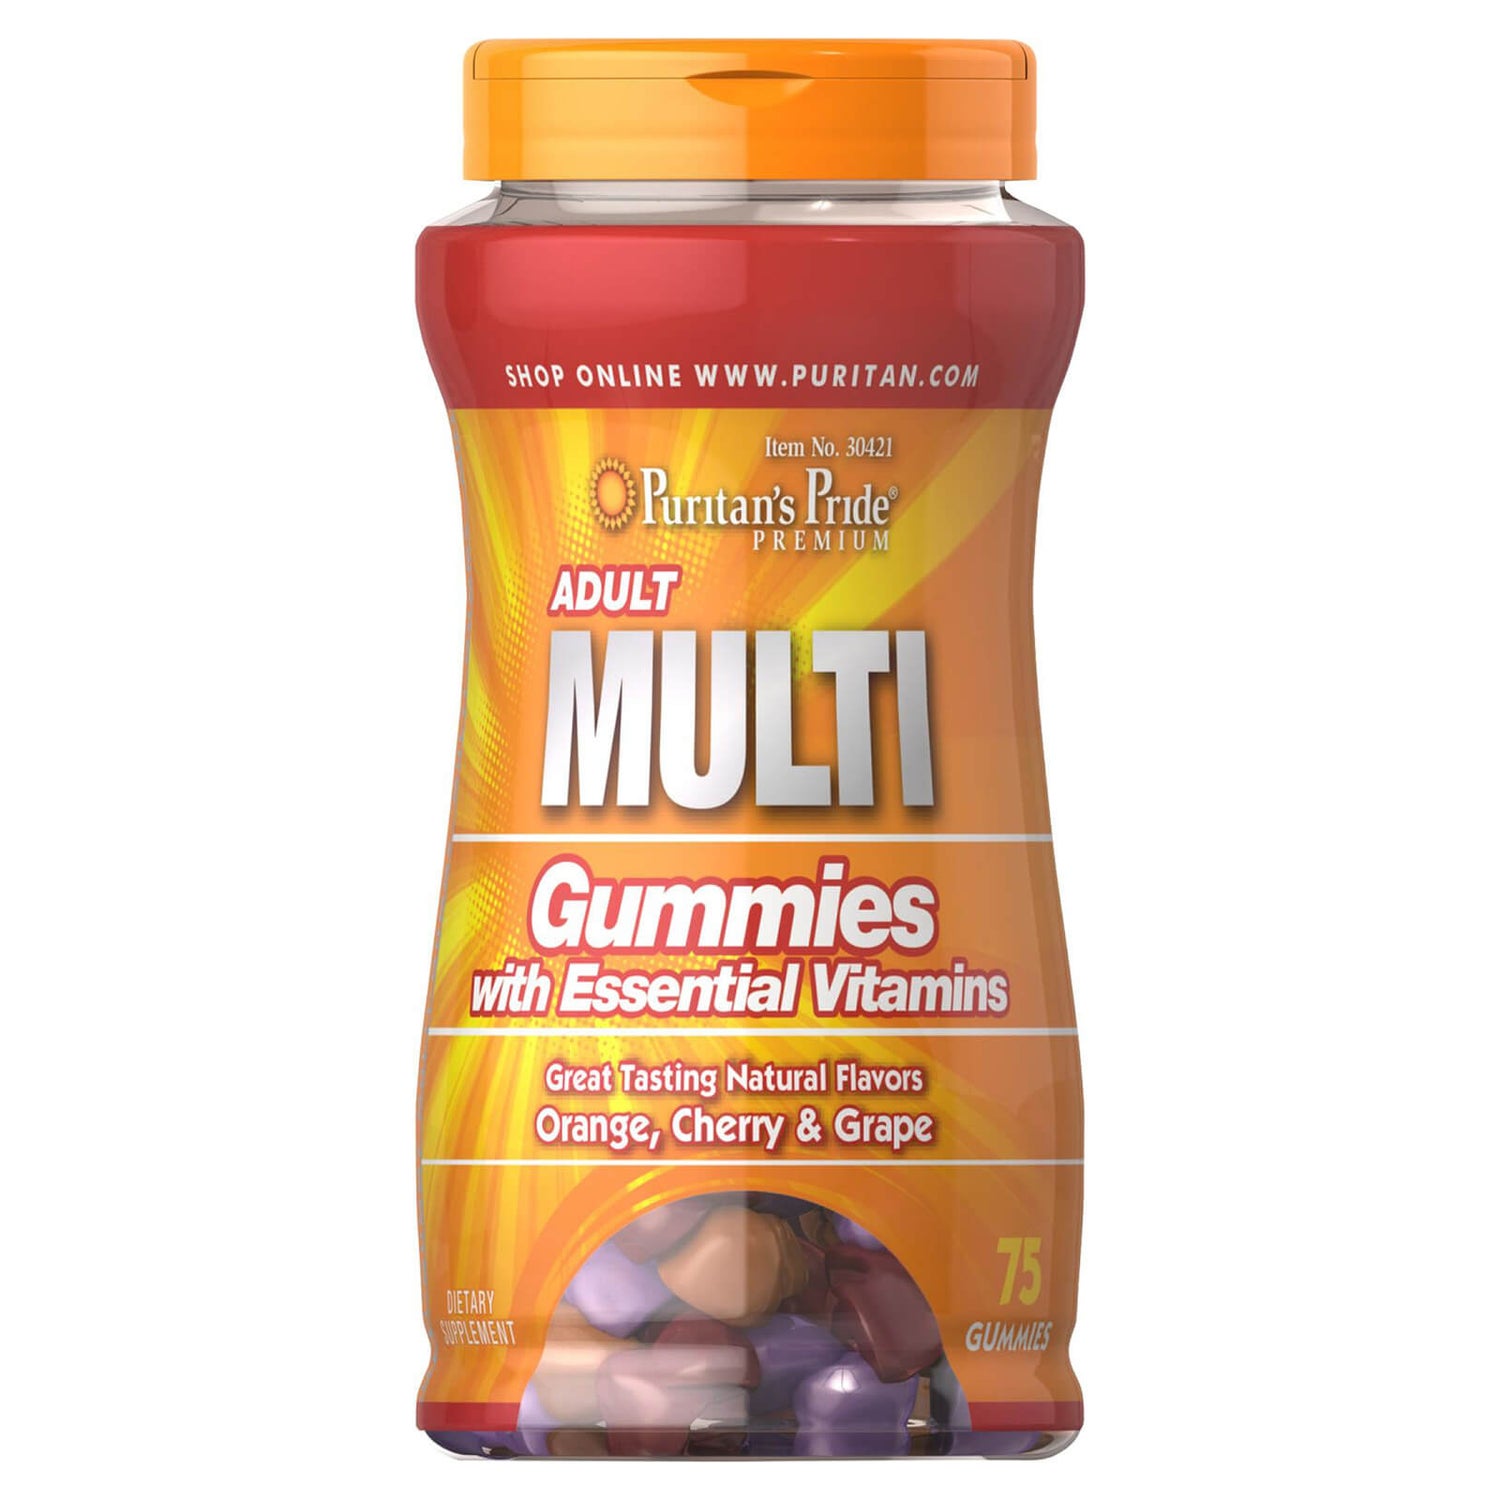 Puritan's Pride Adult Multivitamin - 75 Gummies